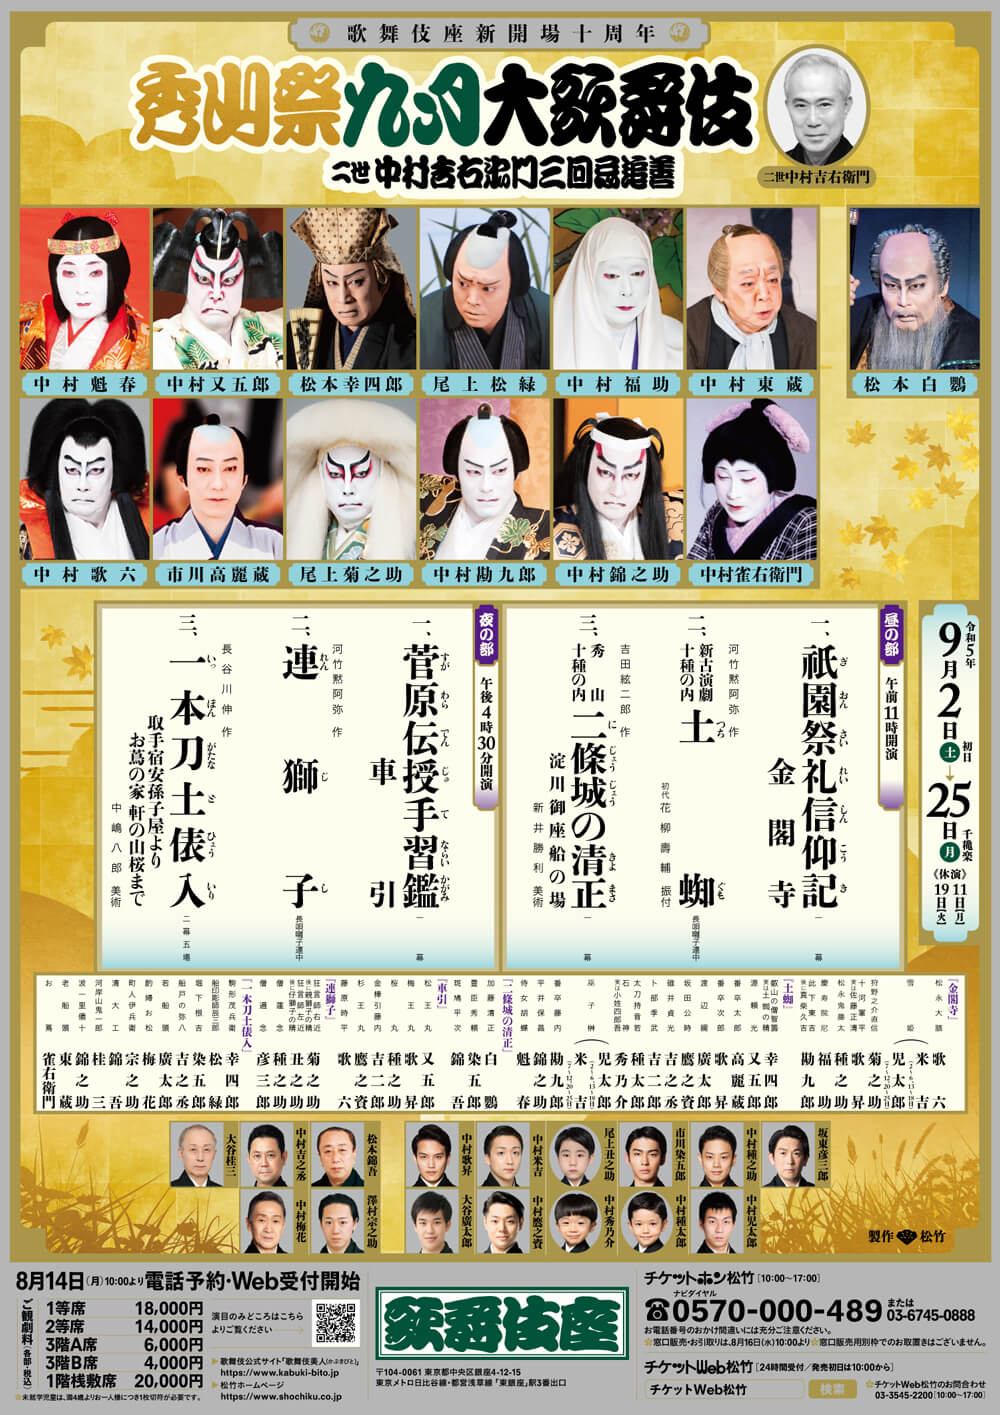 September Program at the Kabukiza Theatre